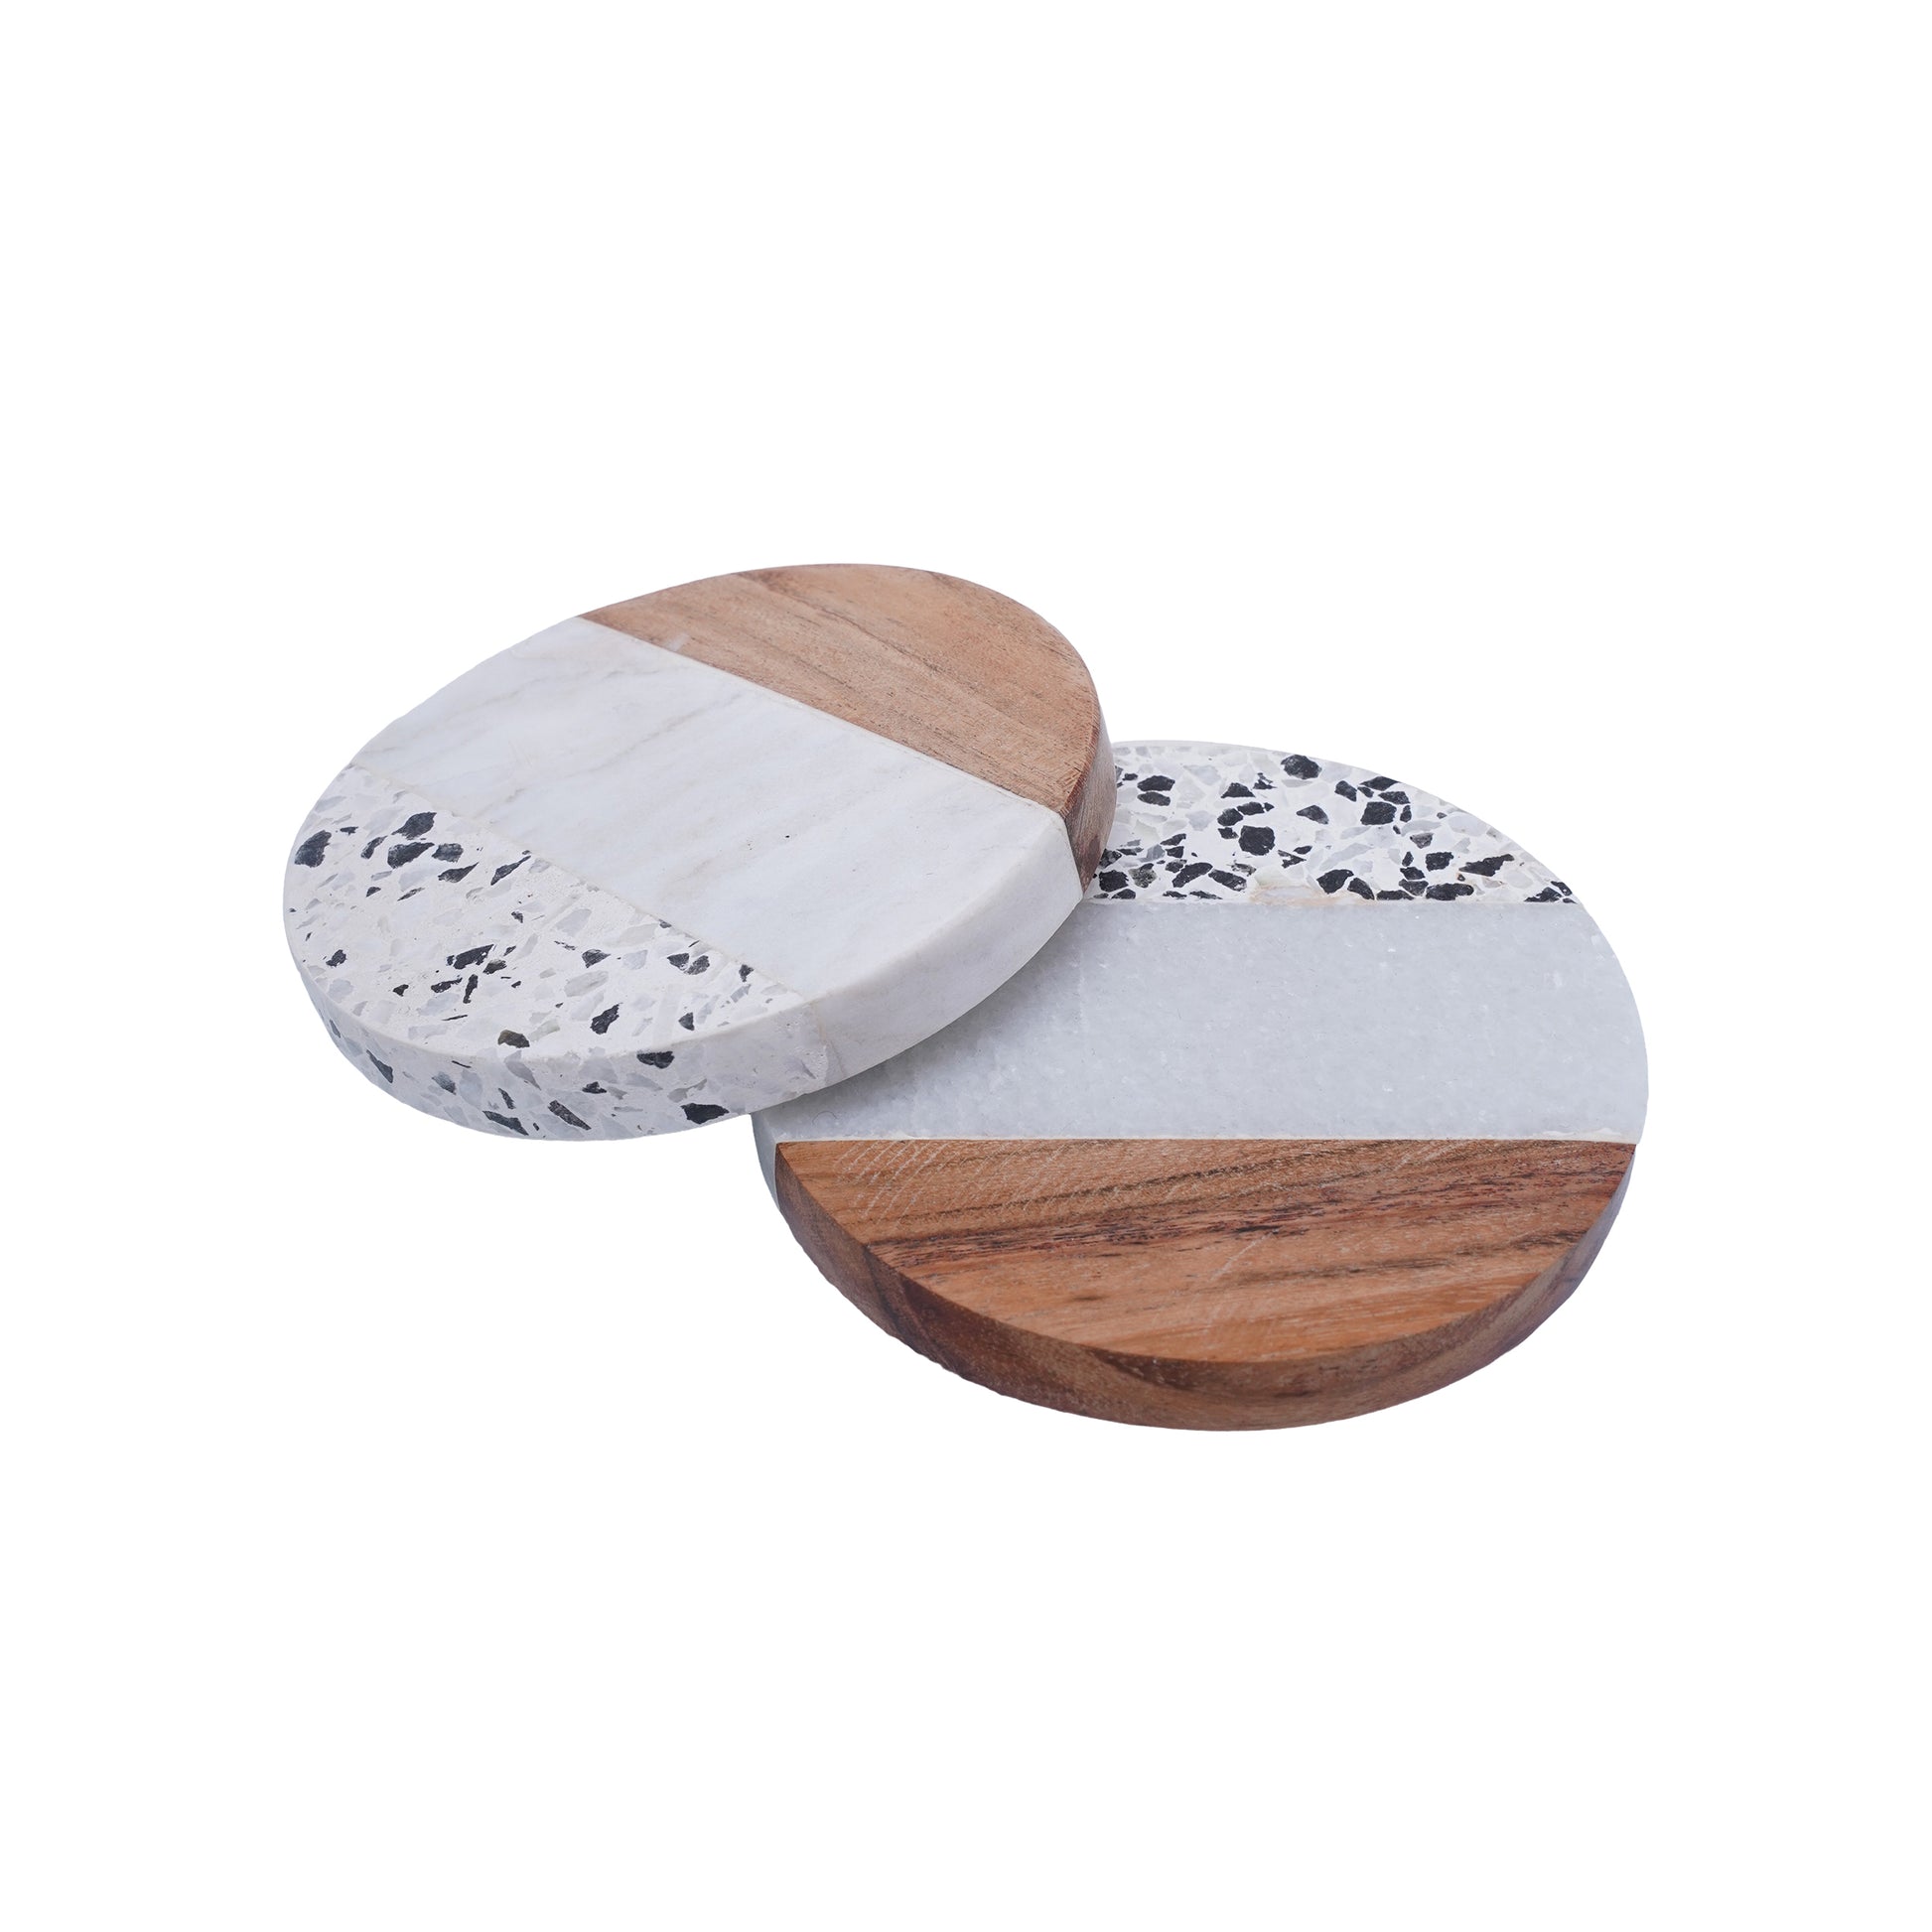 Circular wood and Marble Coasters - set of 2